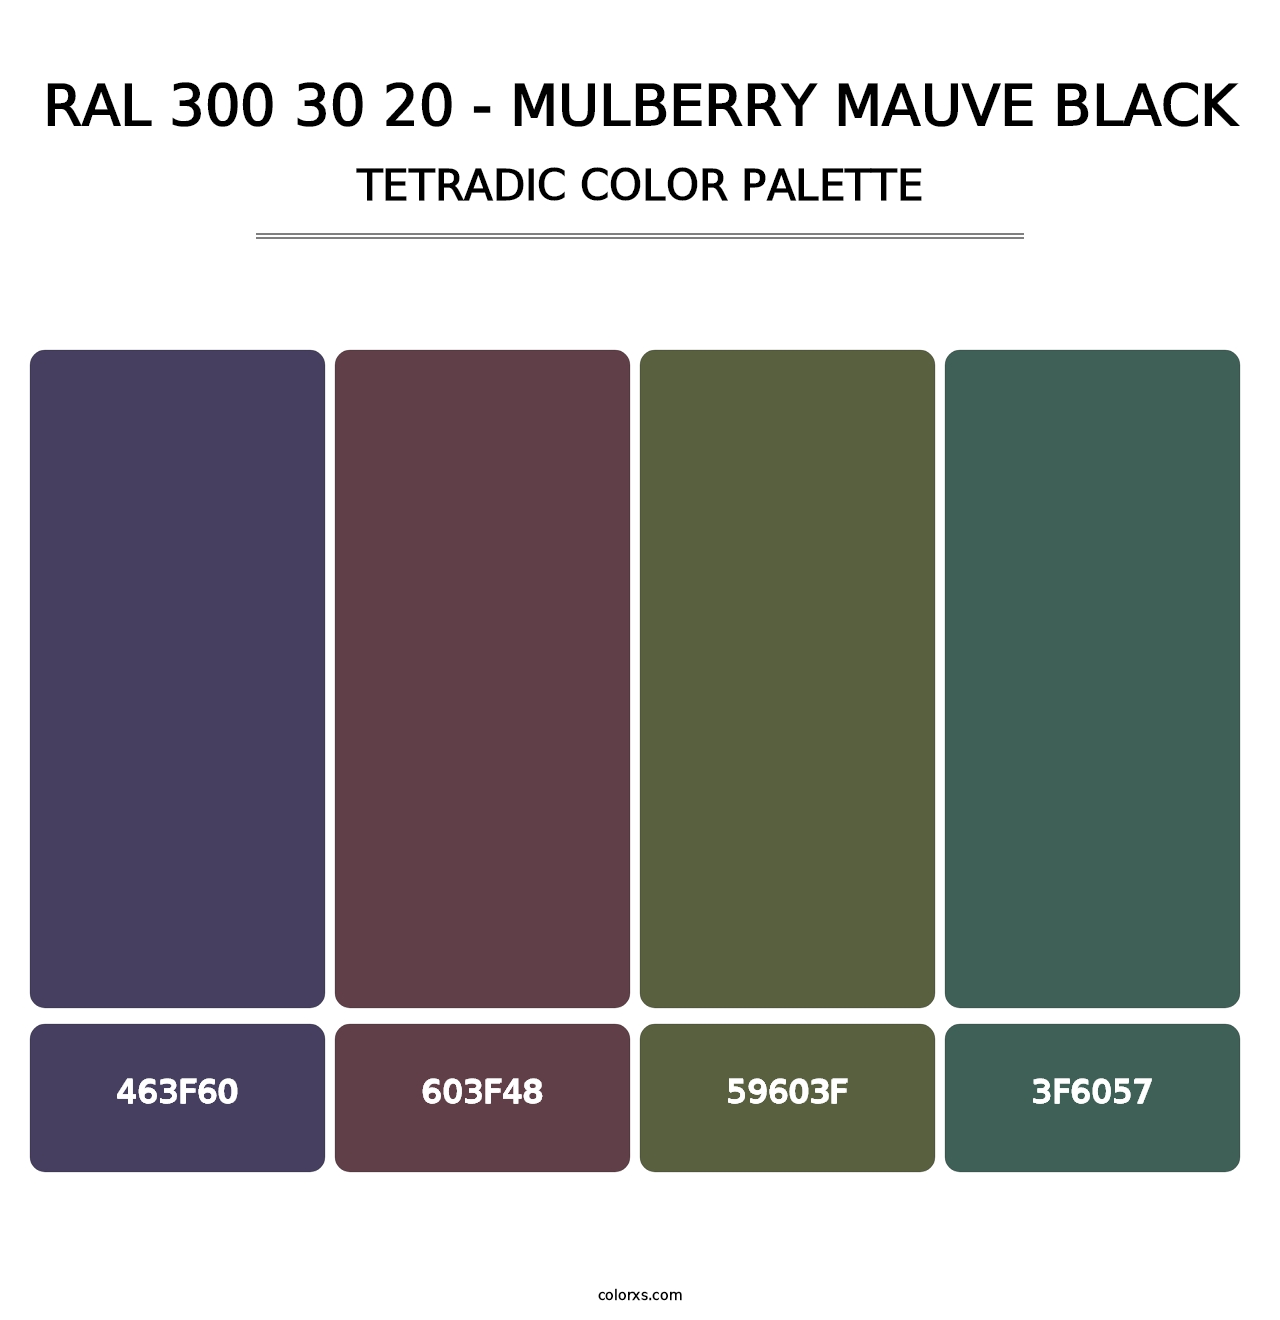 RAL 300 30 20 - Mulberry Mauve Black - Tetradic Color Palette